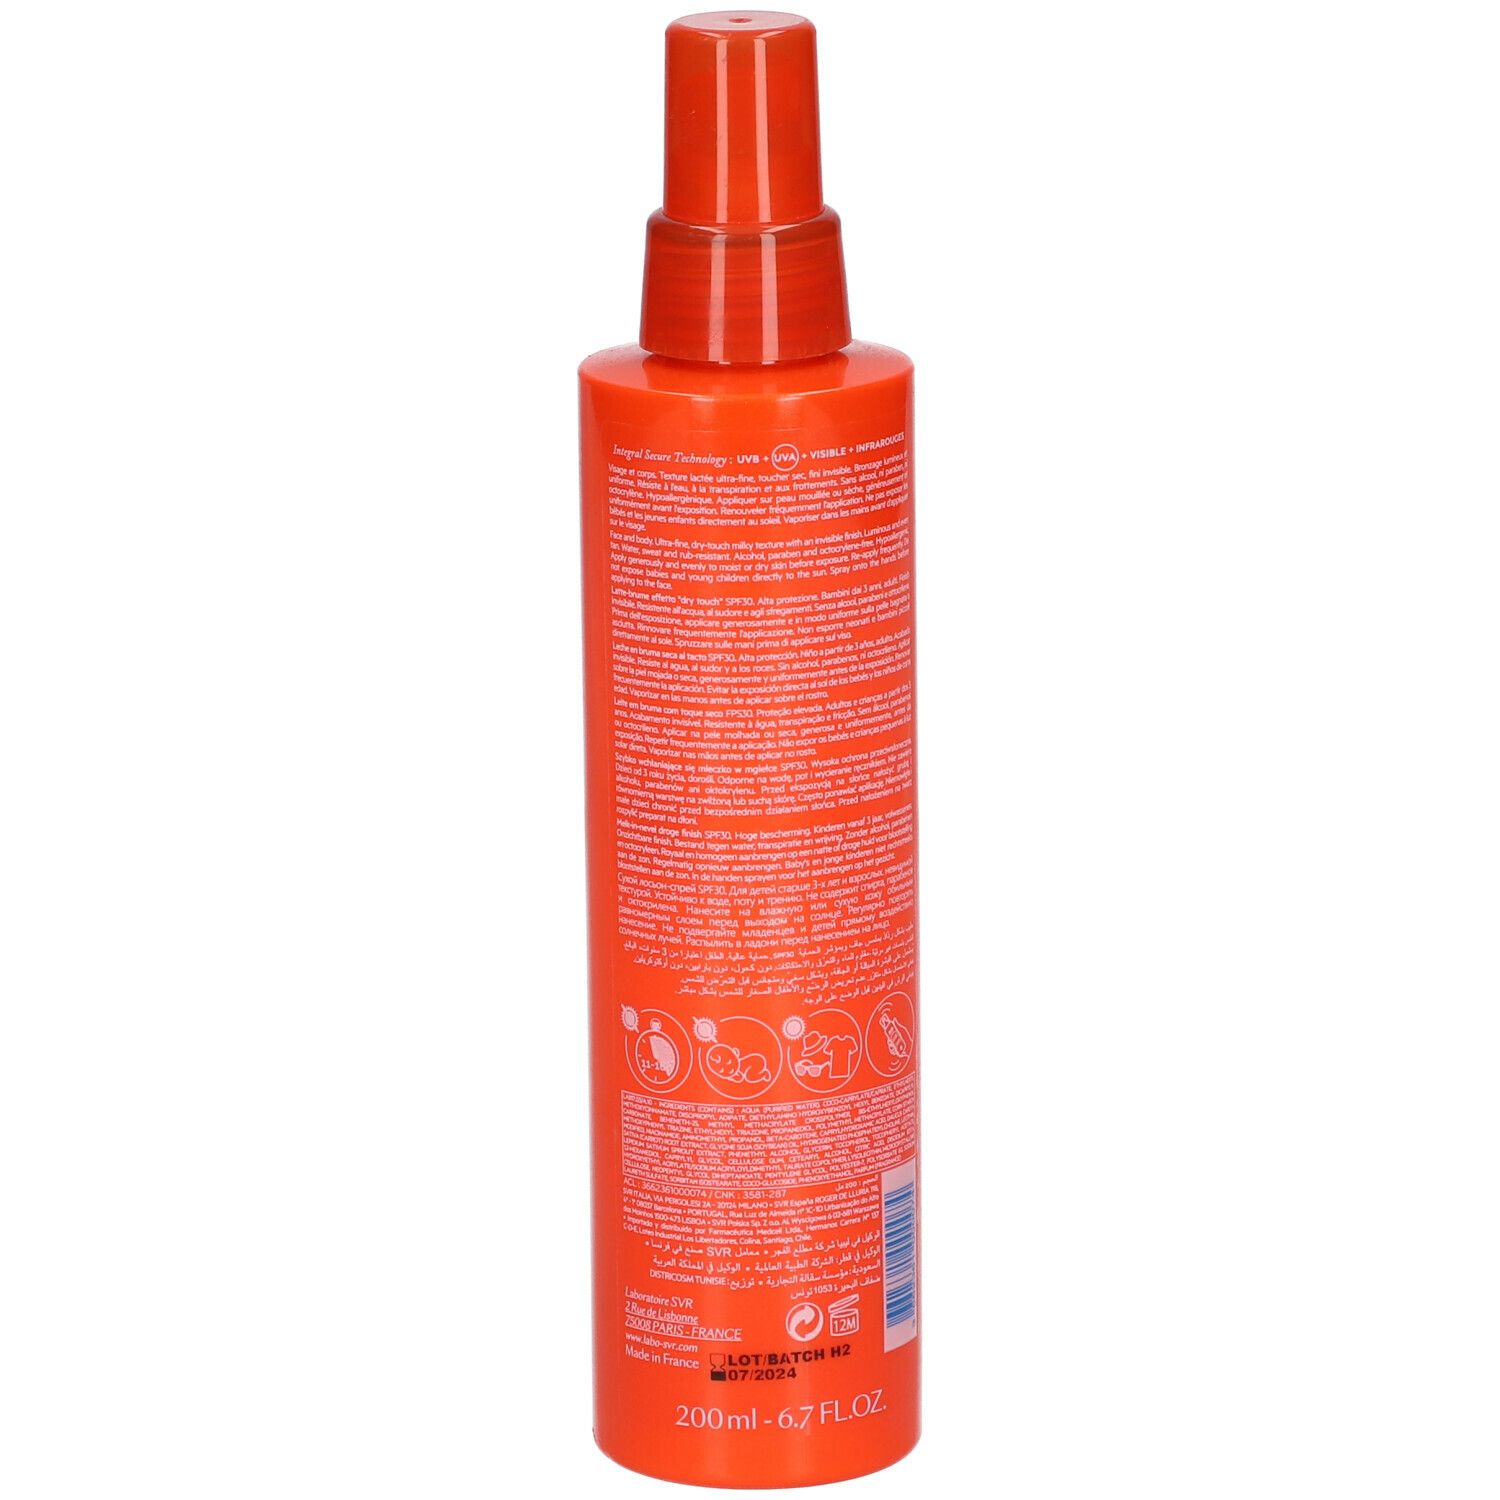 SVR Sun Secure Spray SPF30